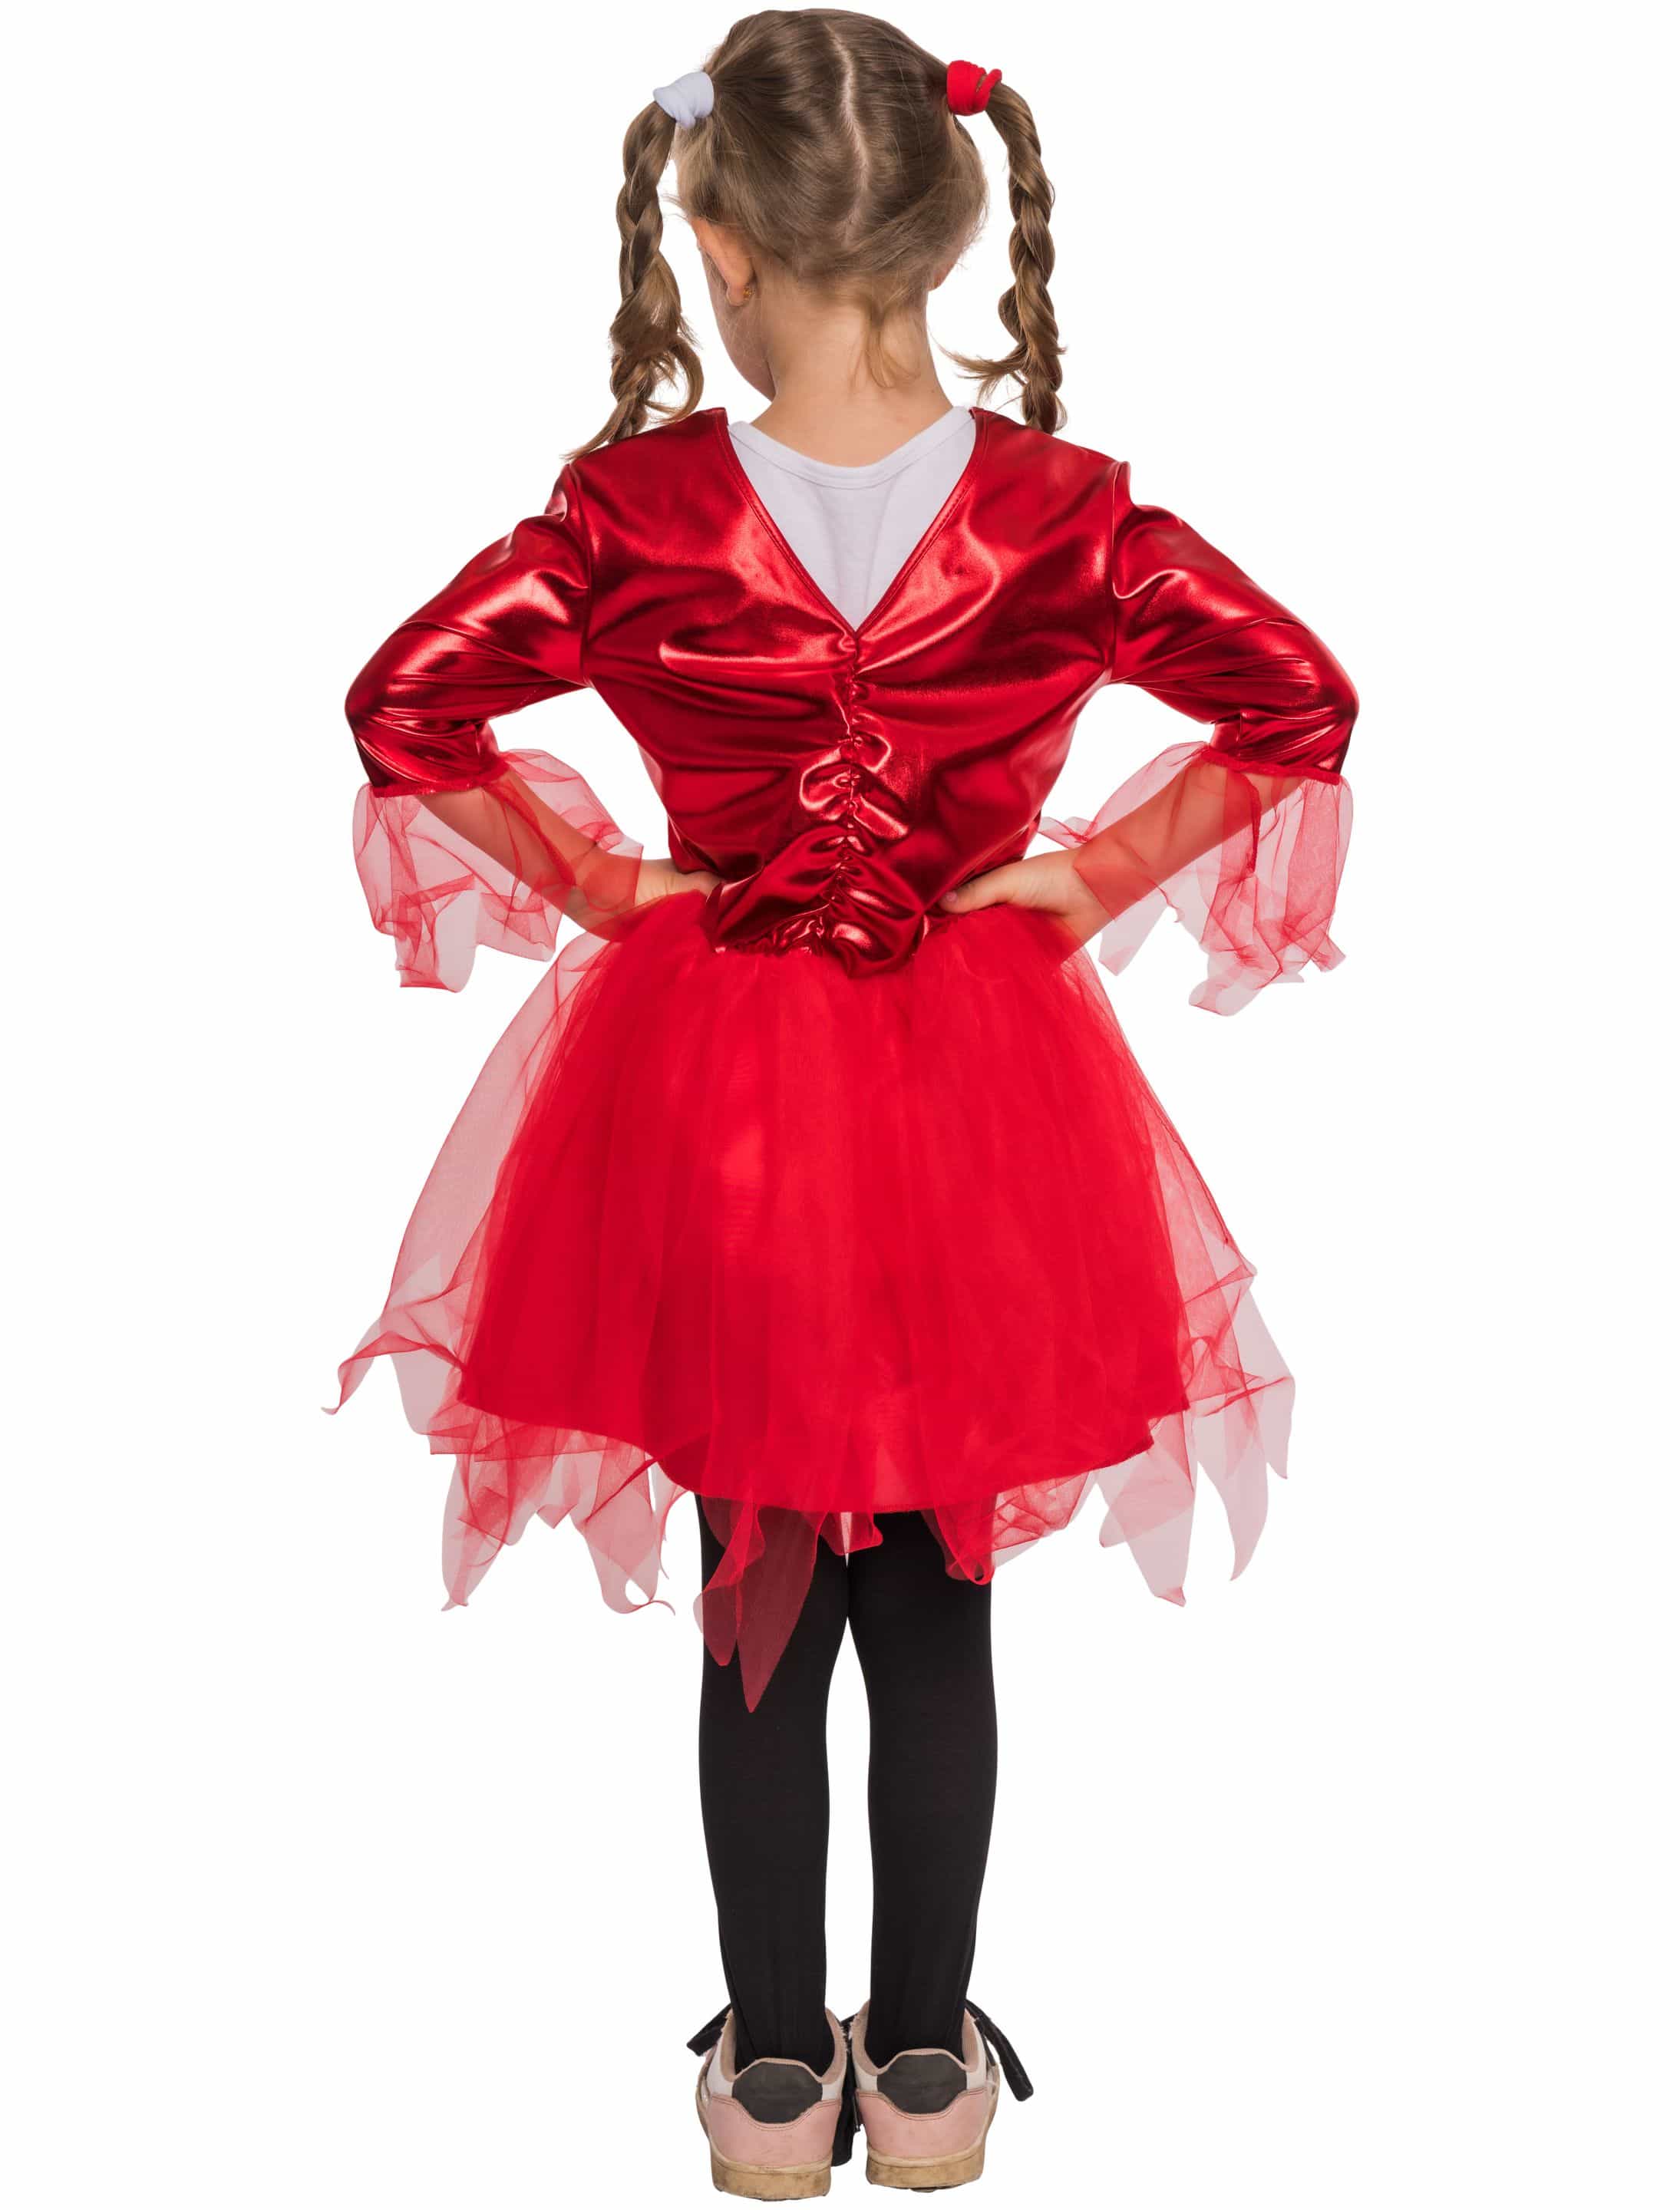 Kleid Teufel metallic mit Tüll  Kinder rot 128